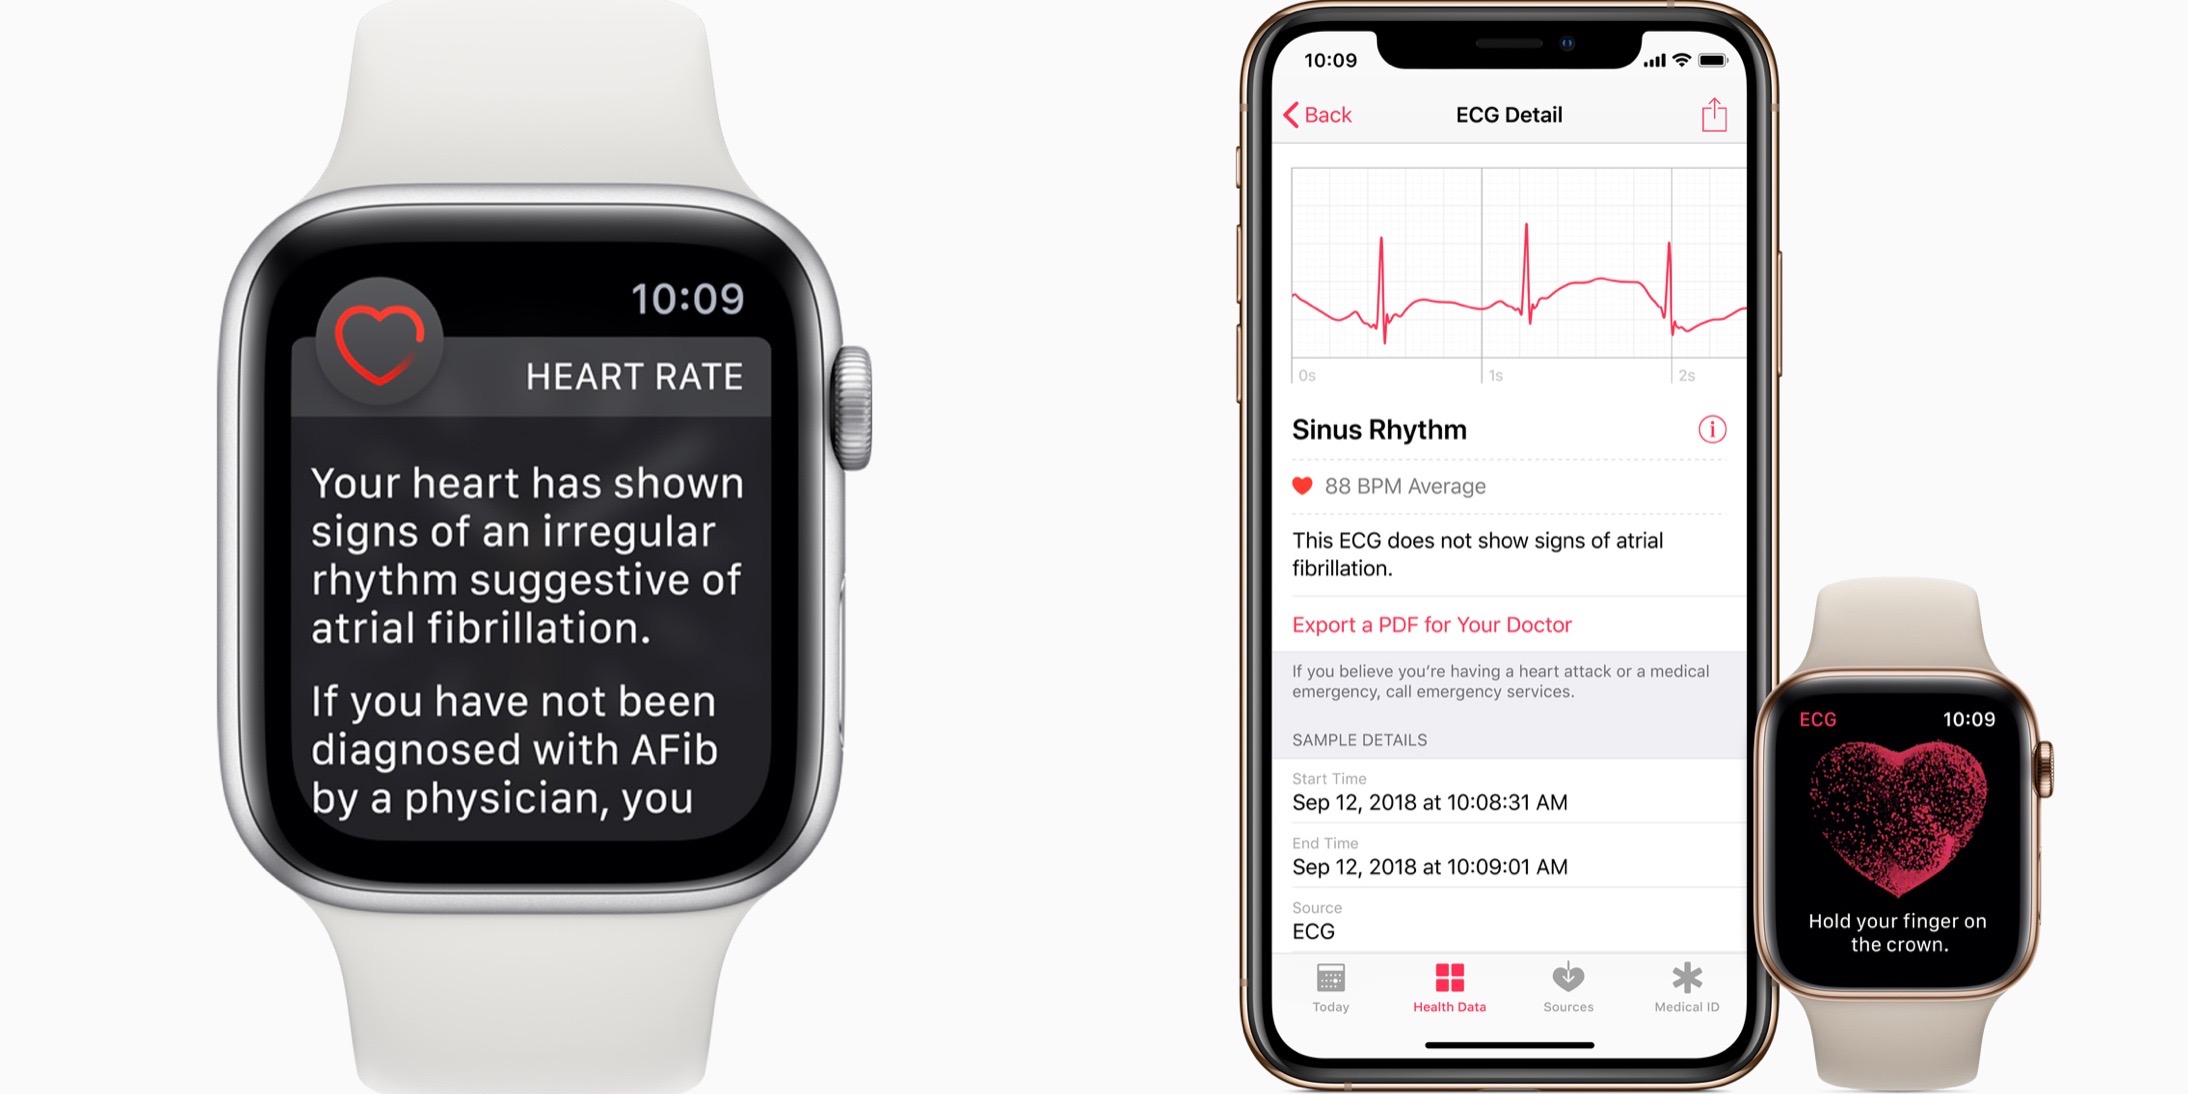 Температура на apple watch. Кардиограмма на Эппл вотч. ЭКГ на часах Apple. Heart rate ECG часы. Уведомление о пульсе Apple watch.